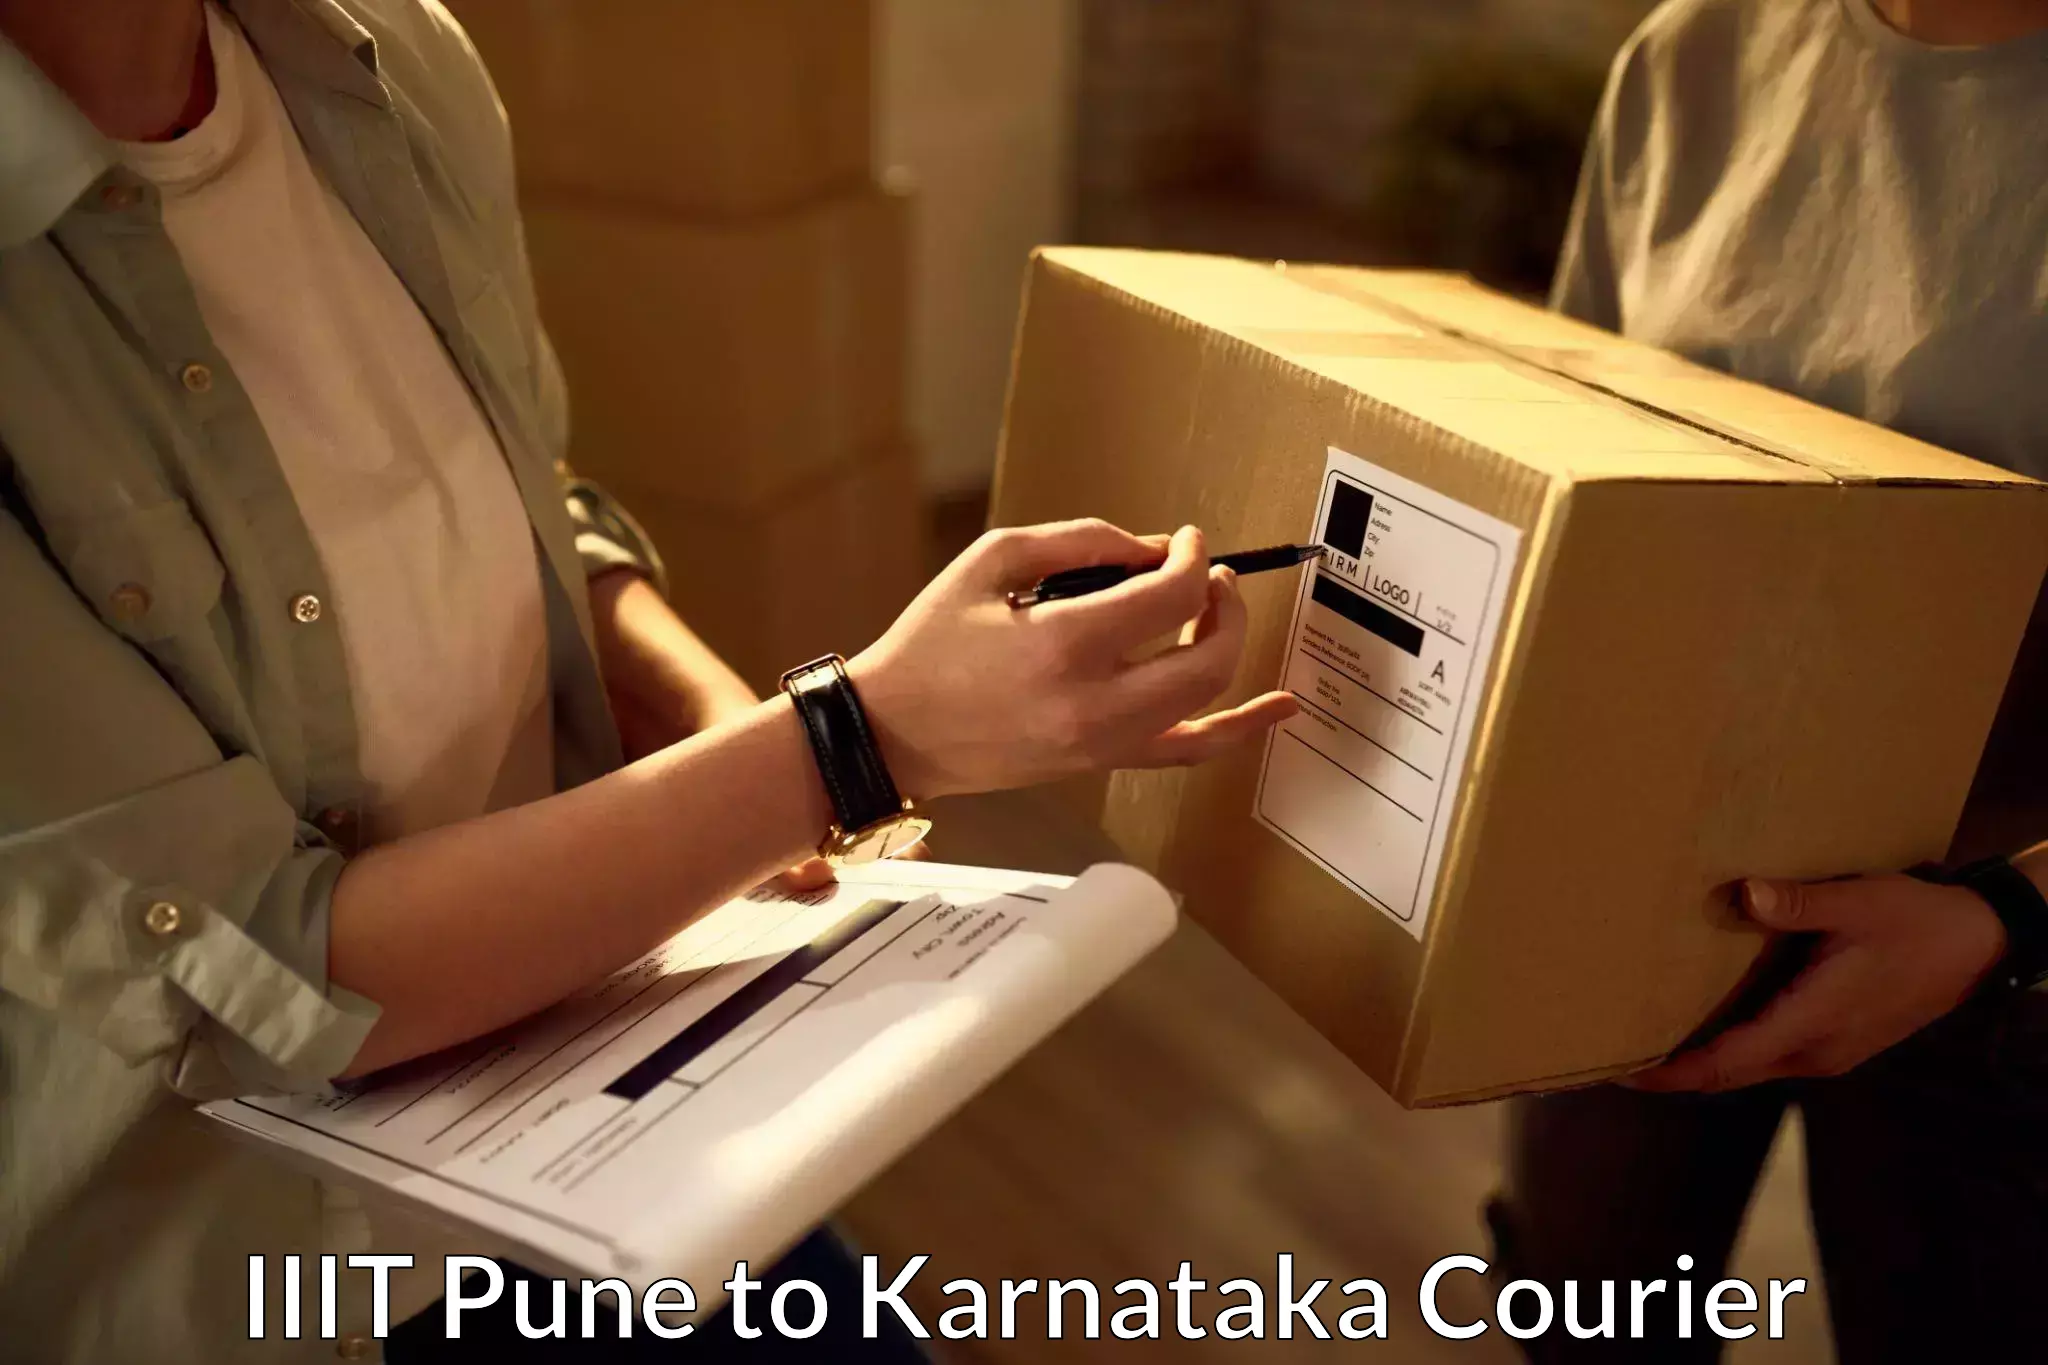 Small parcel delivery IIIT Pune to Ukkadagatri